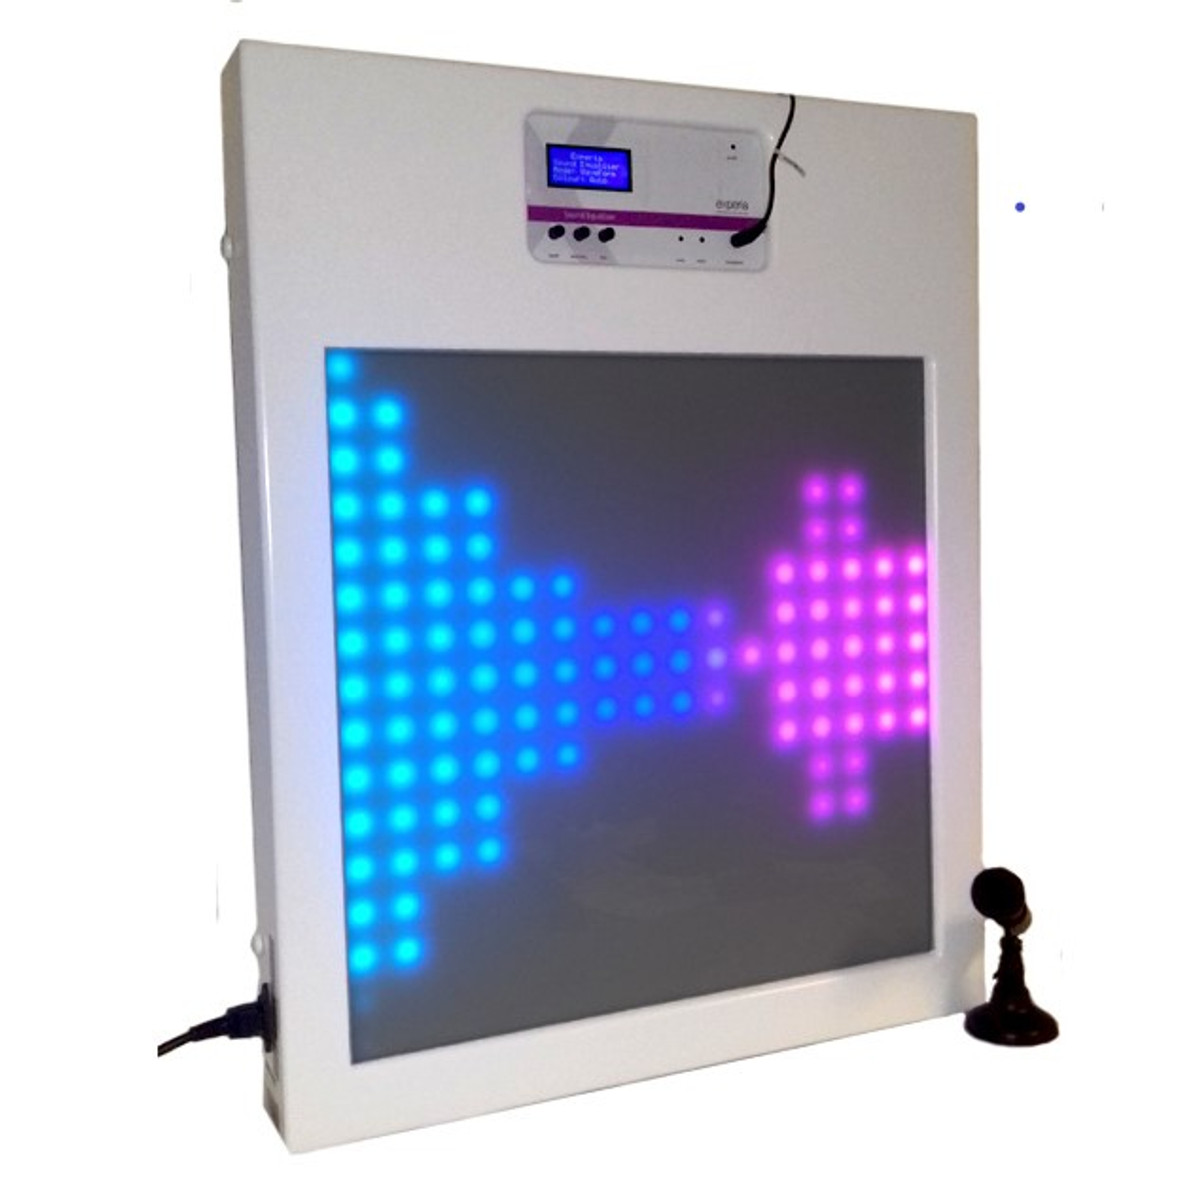 Interactive Sound Panel - Sensory Room Equipment